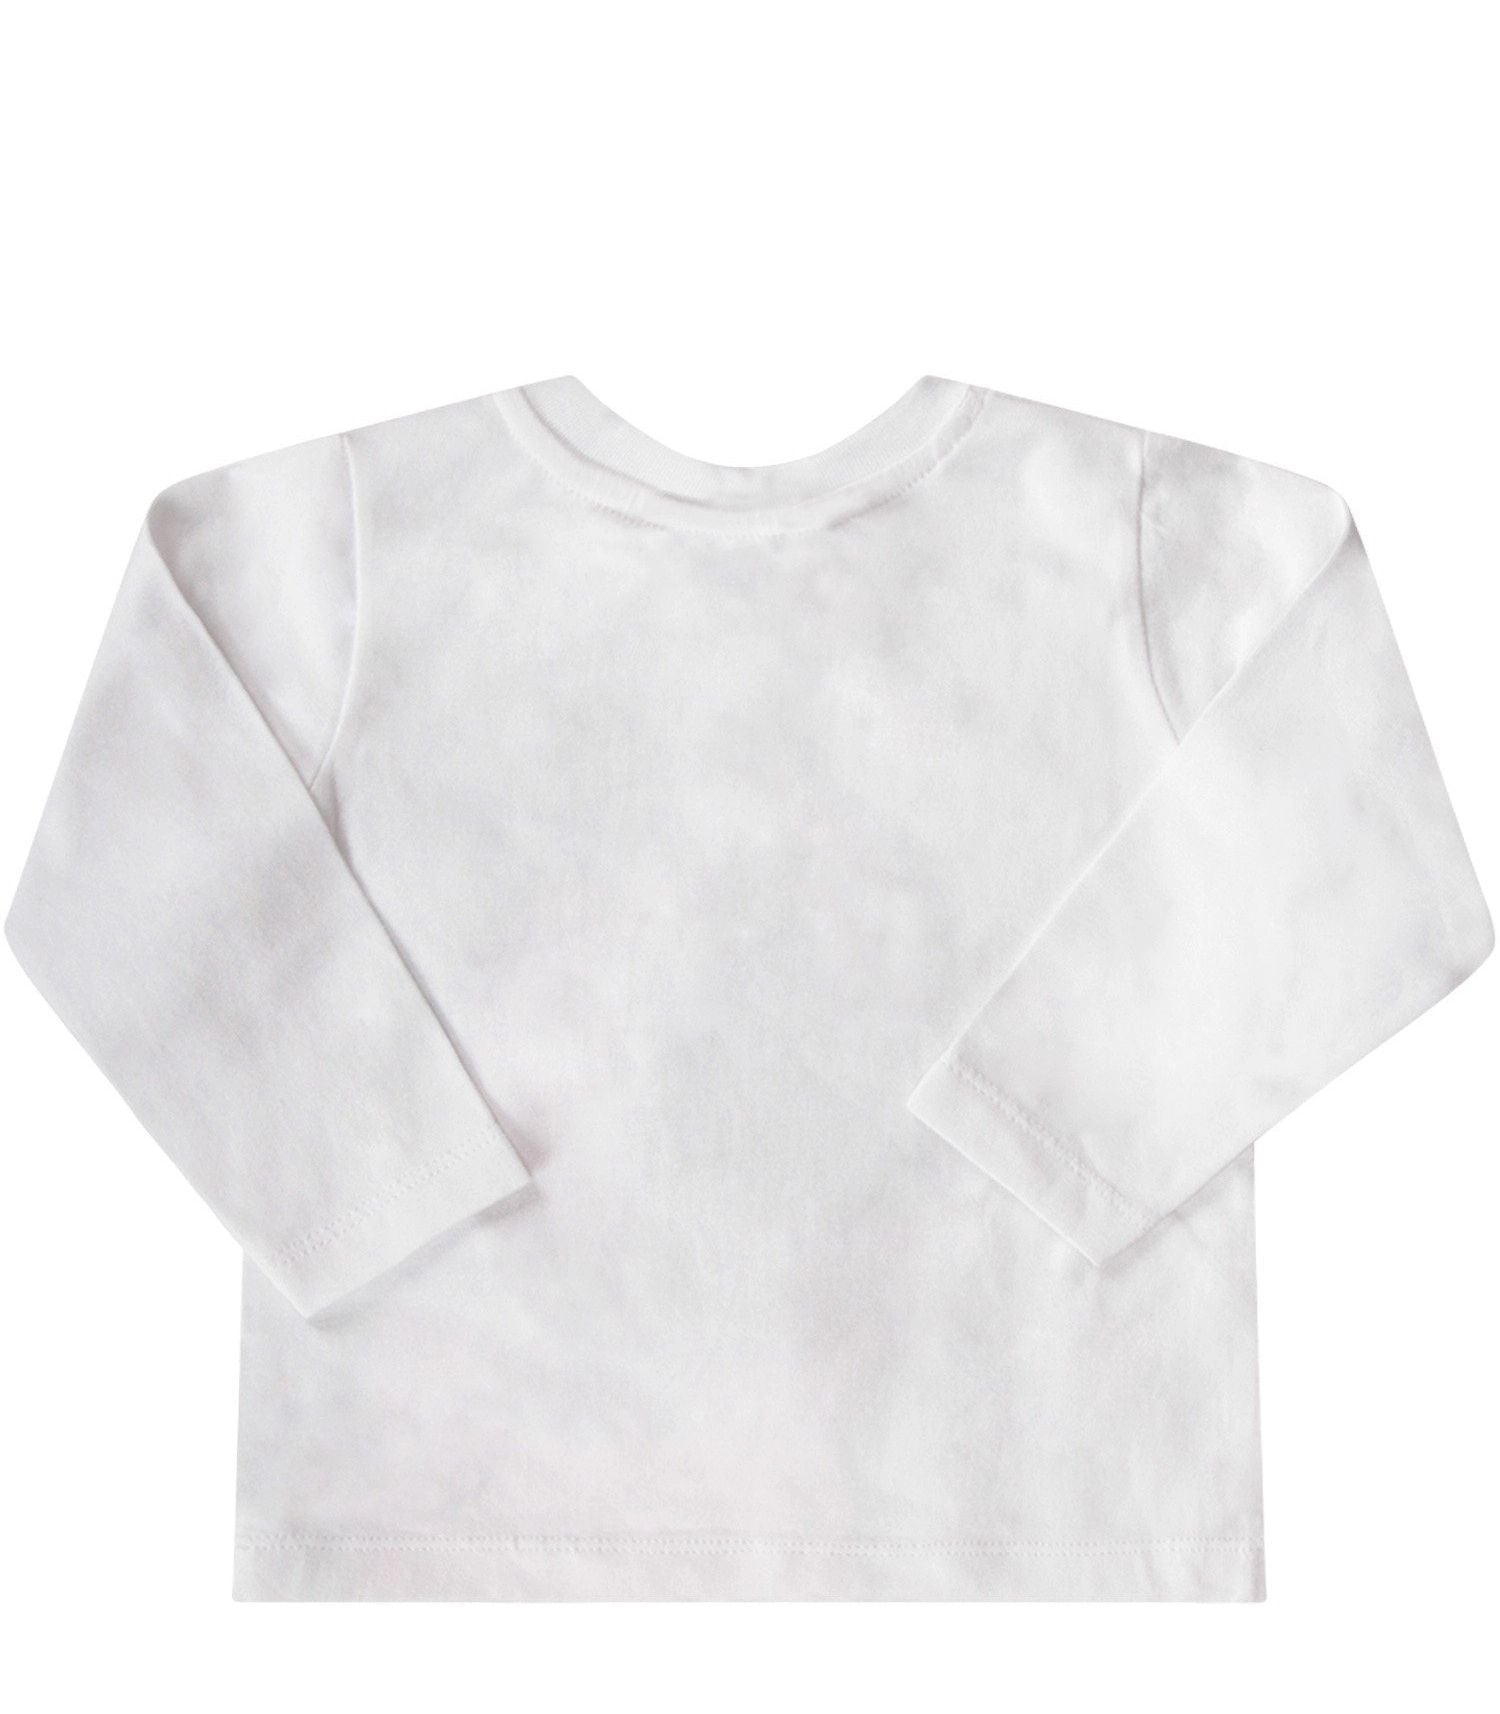 Baby Girls White Pattern Cotton Top